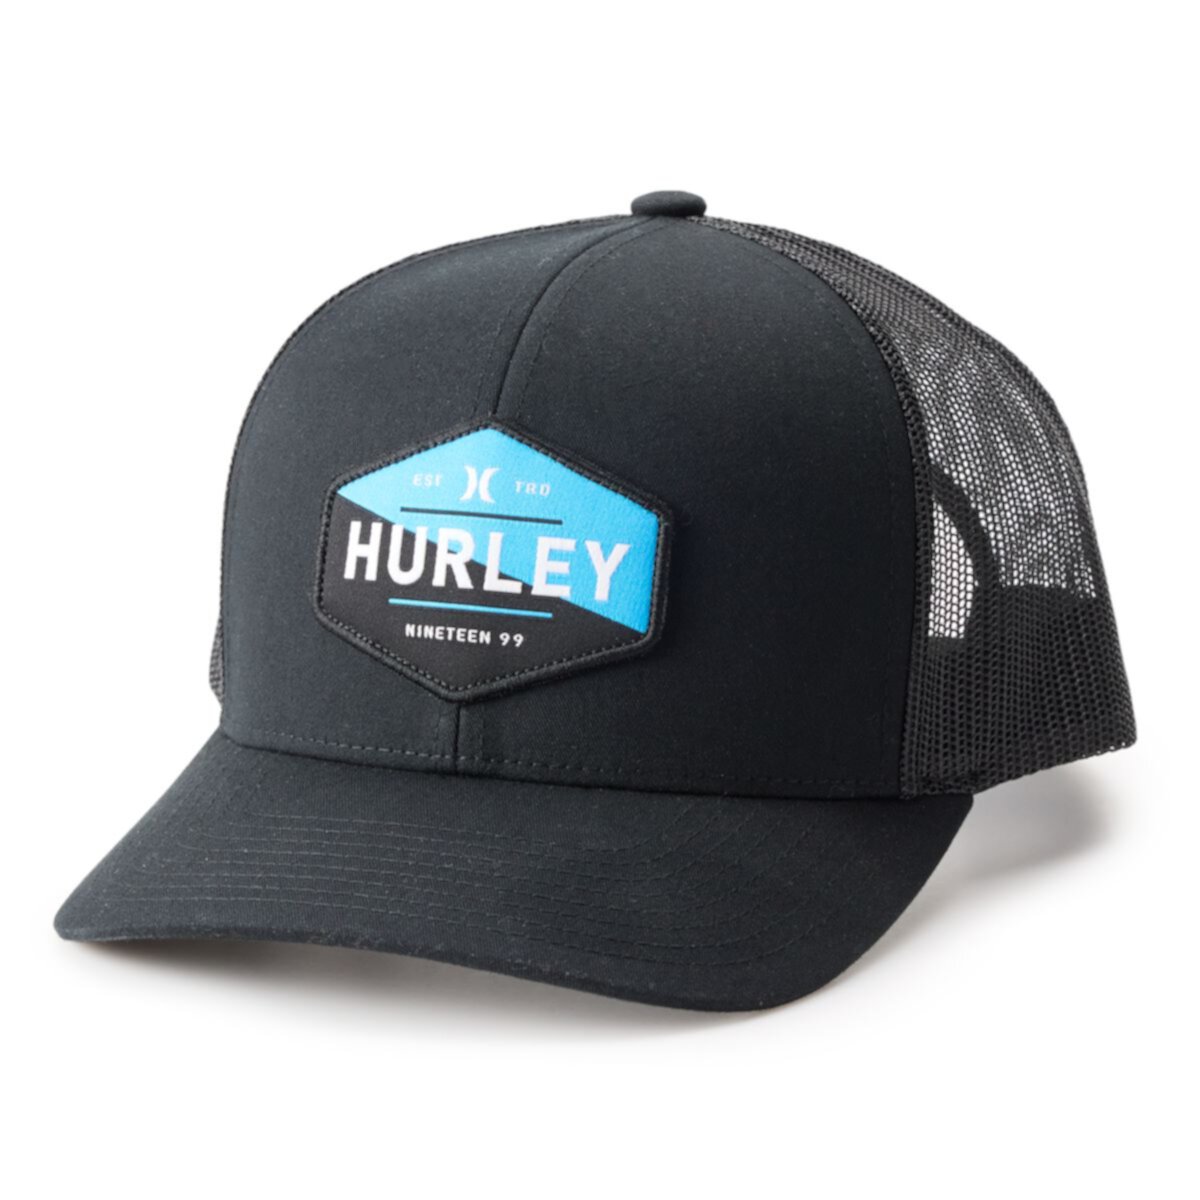 Мужская кепка Hurley Side Street Trucker Hurley